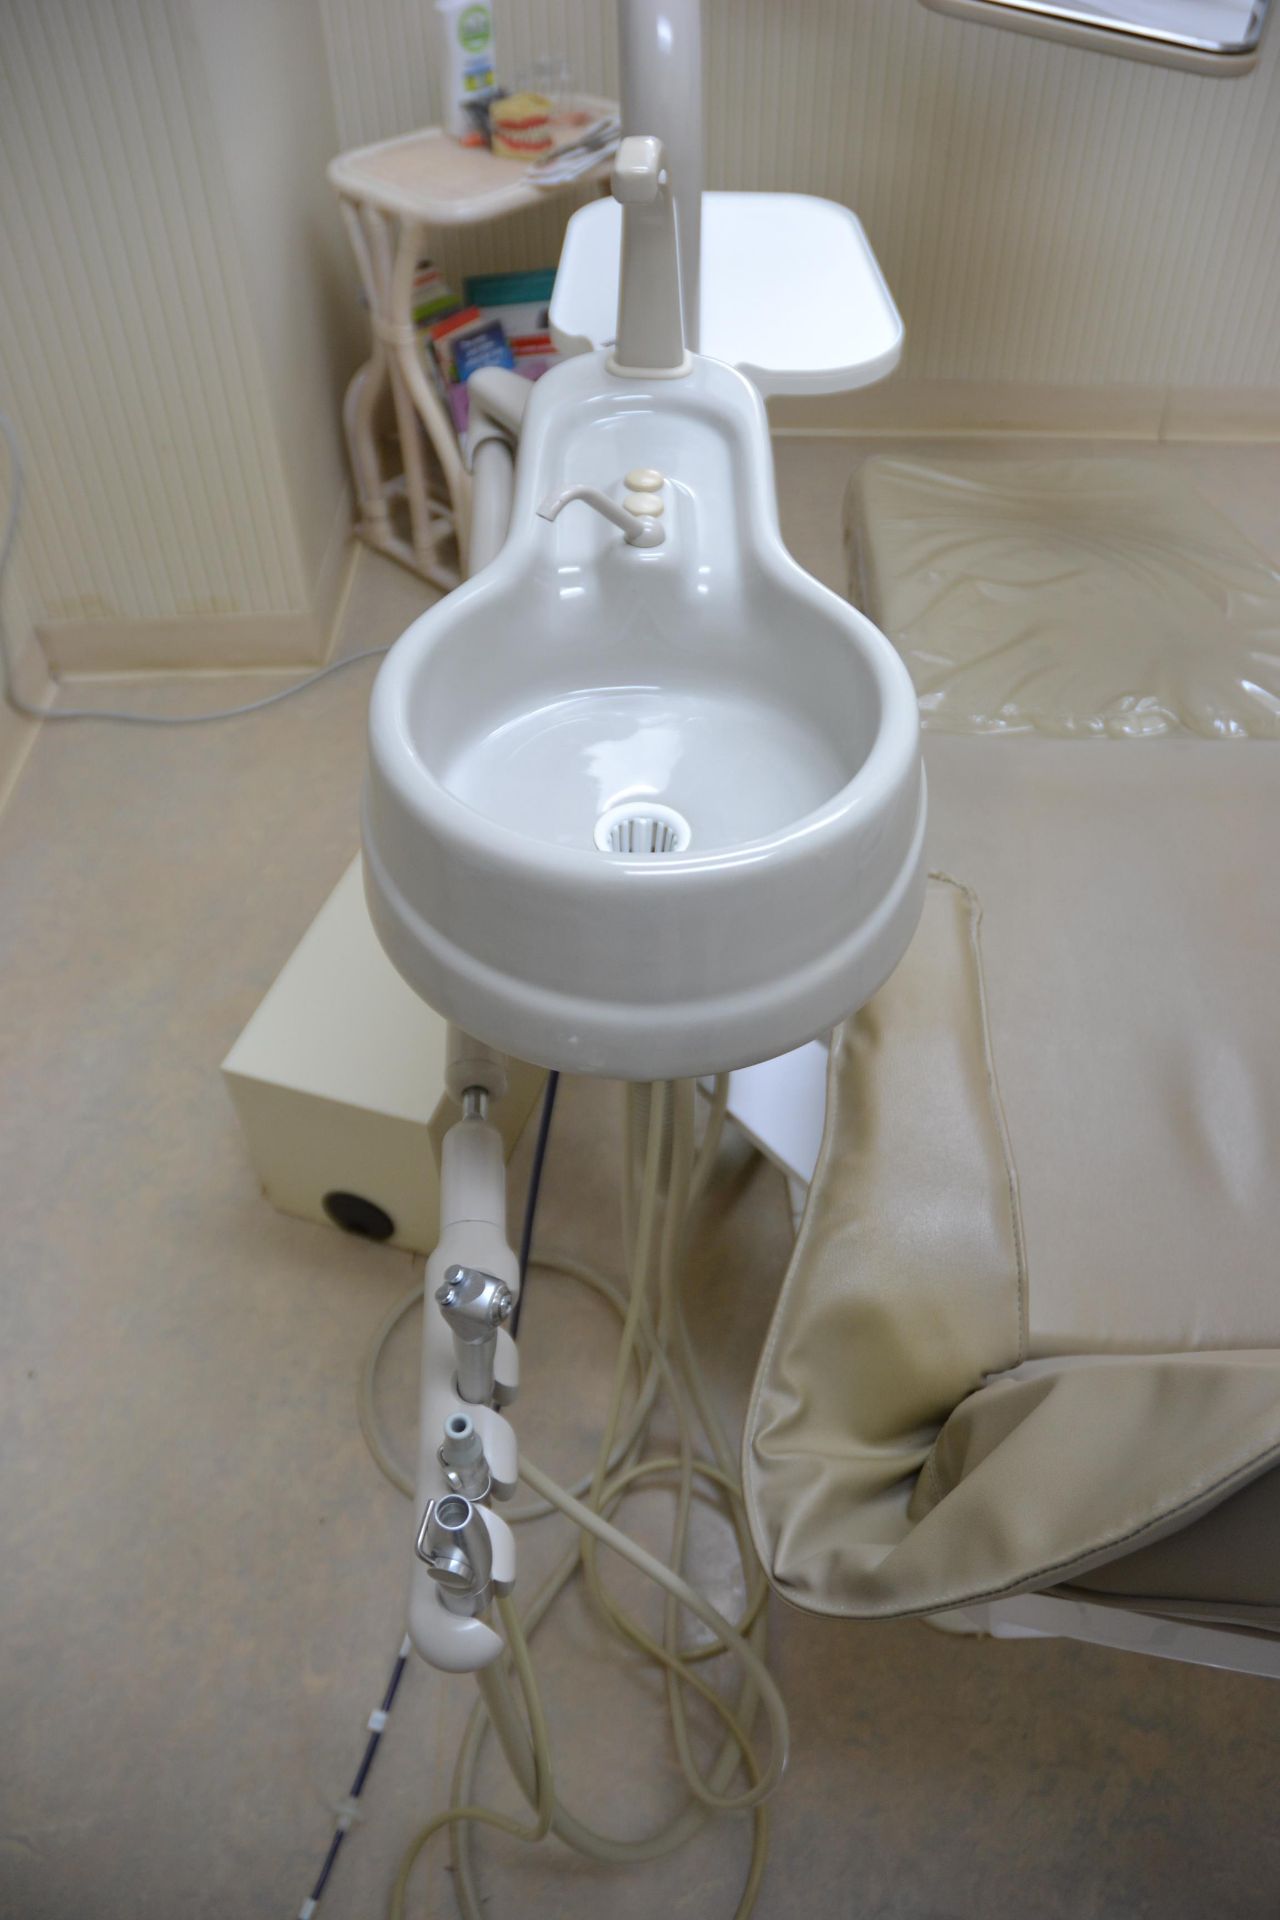 2003 Belmopnt Bel-20 Dental Exam Chair Operatory Set-Up Package - Image 3 of 3